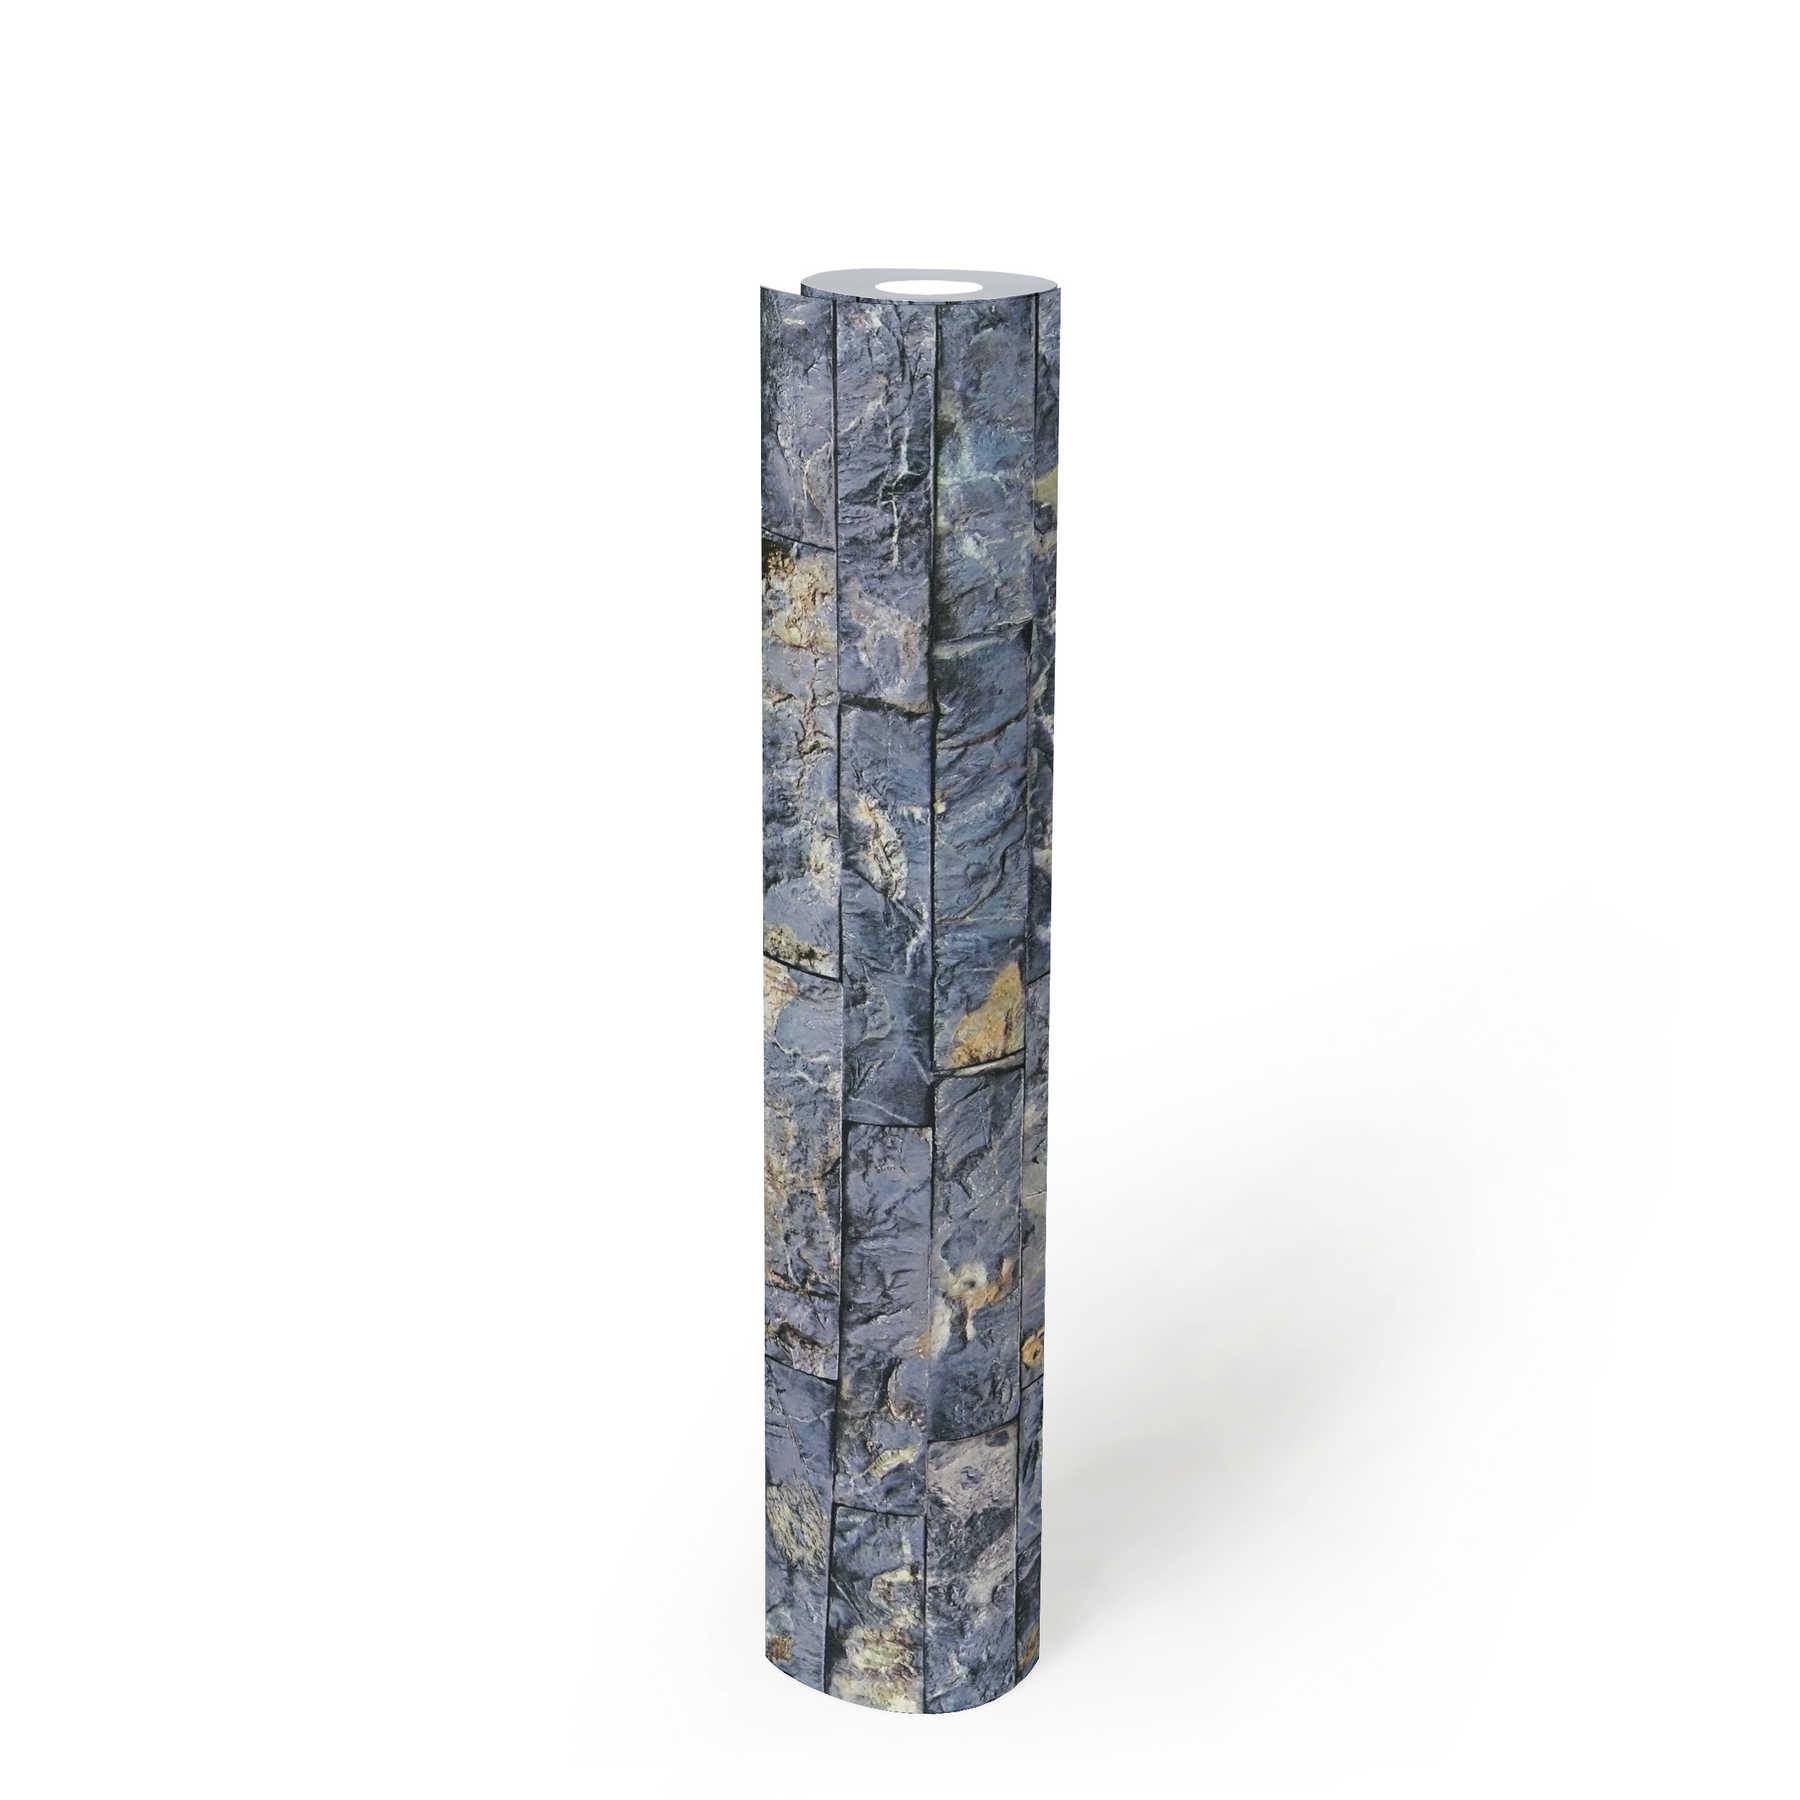             Wallpaper stone look with 3D masonry quartz stone - blue, grey
        